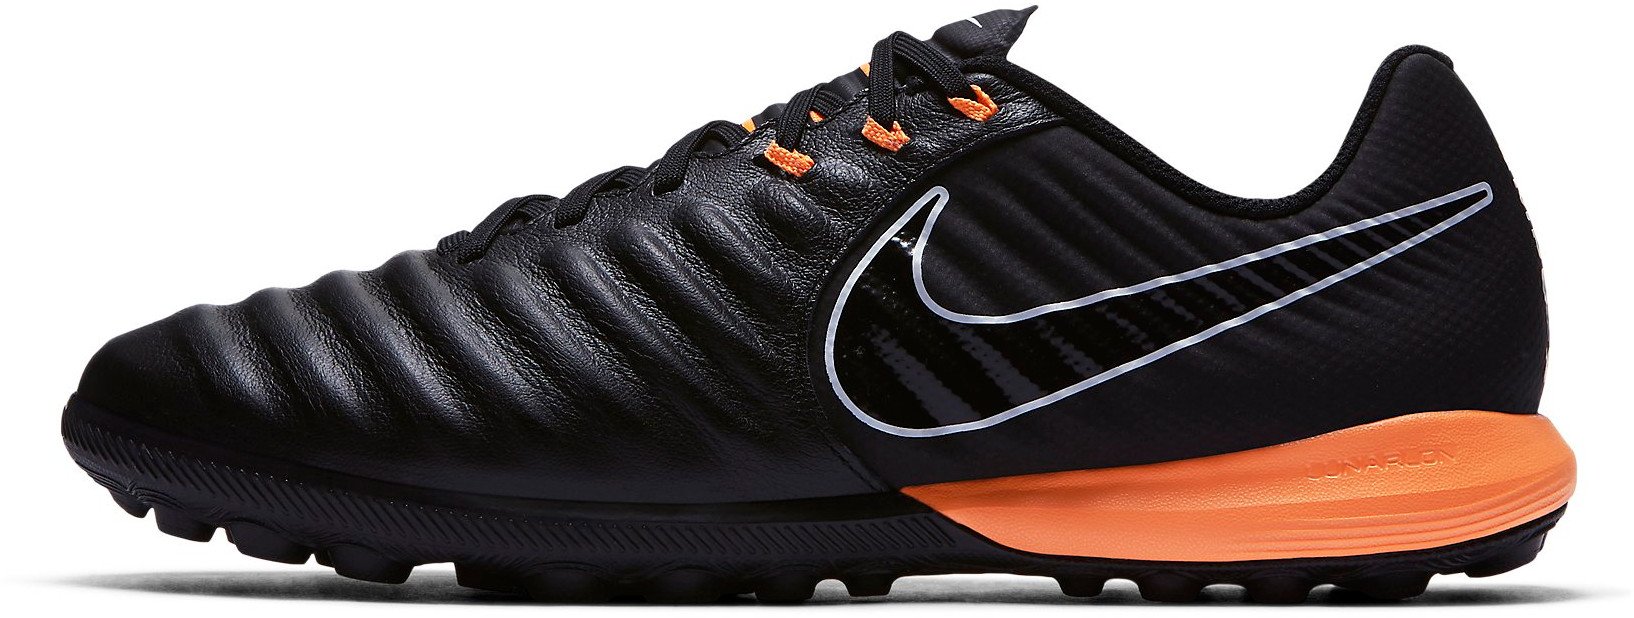 Football shoes Nike LUNAR LEGENDX 7 PRO TF - Top4Football.com